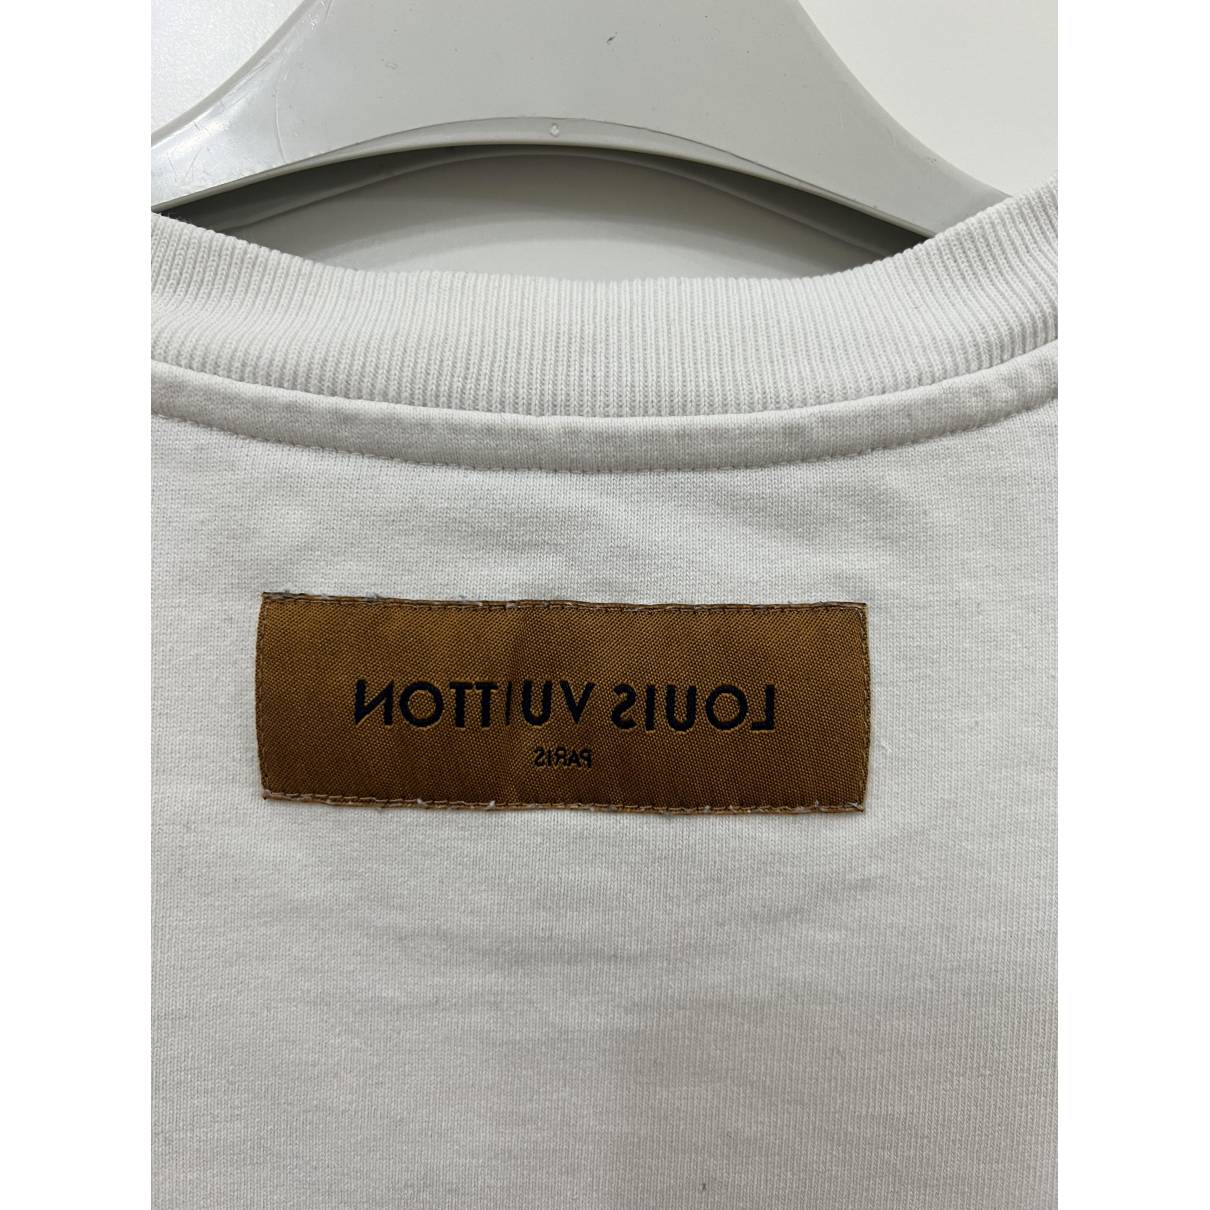 Camisetas Louis vuitton Blanco talla M International de en Algodón -  35059847